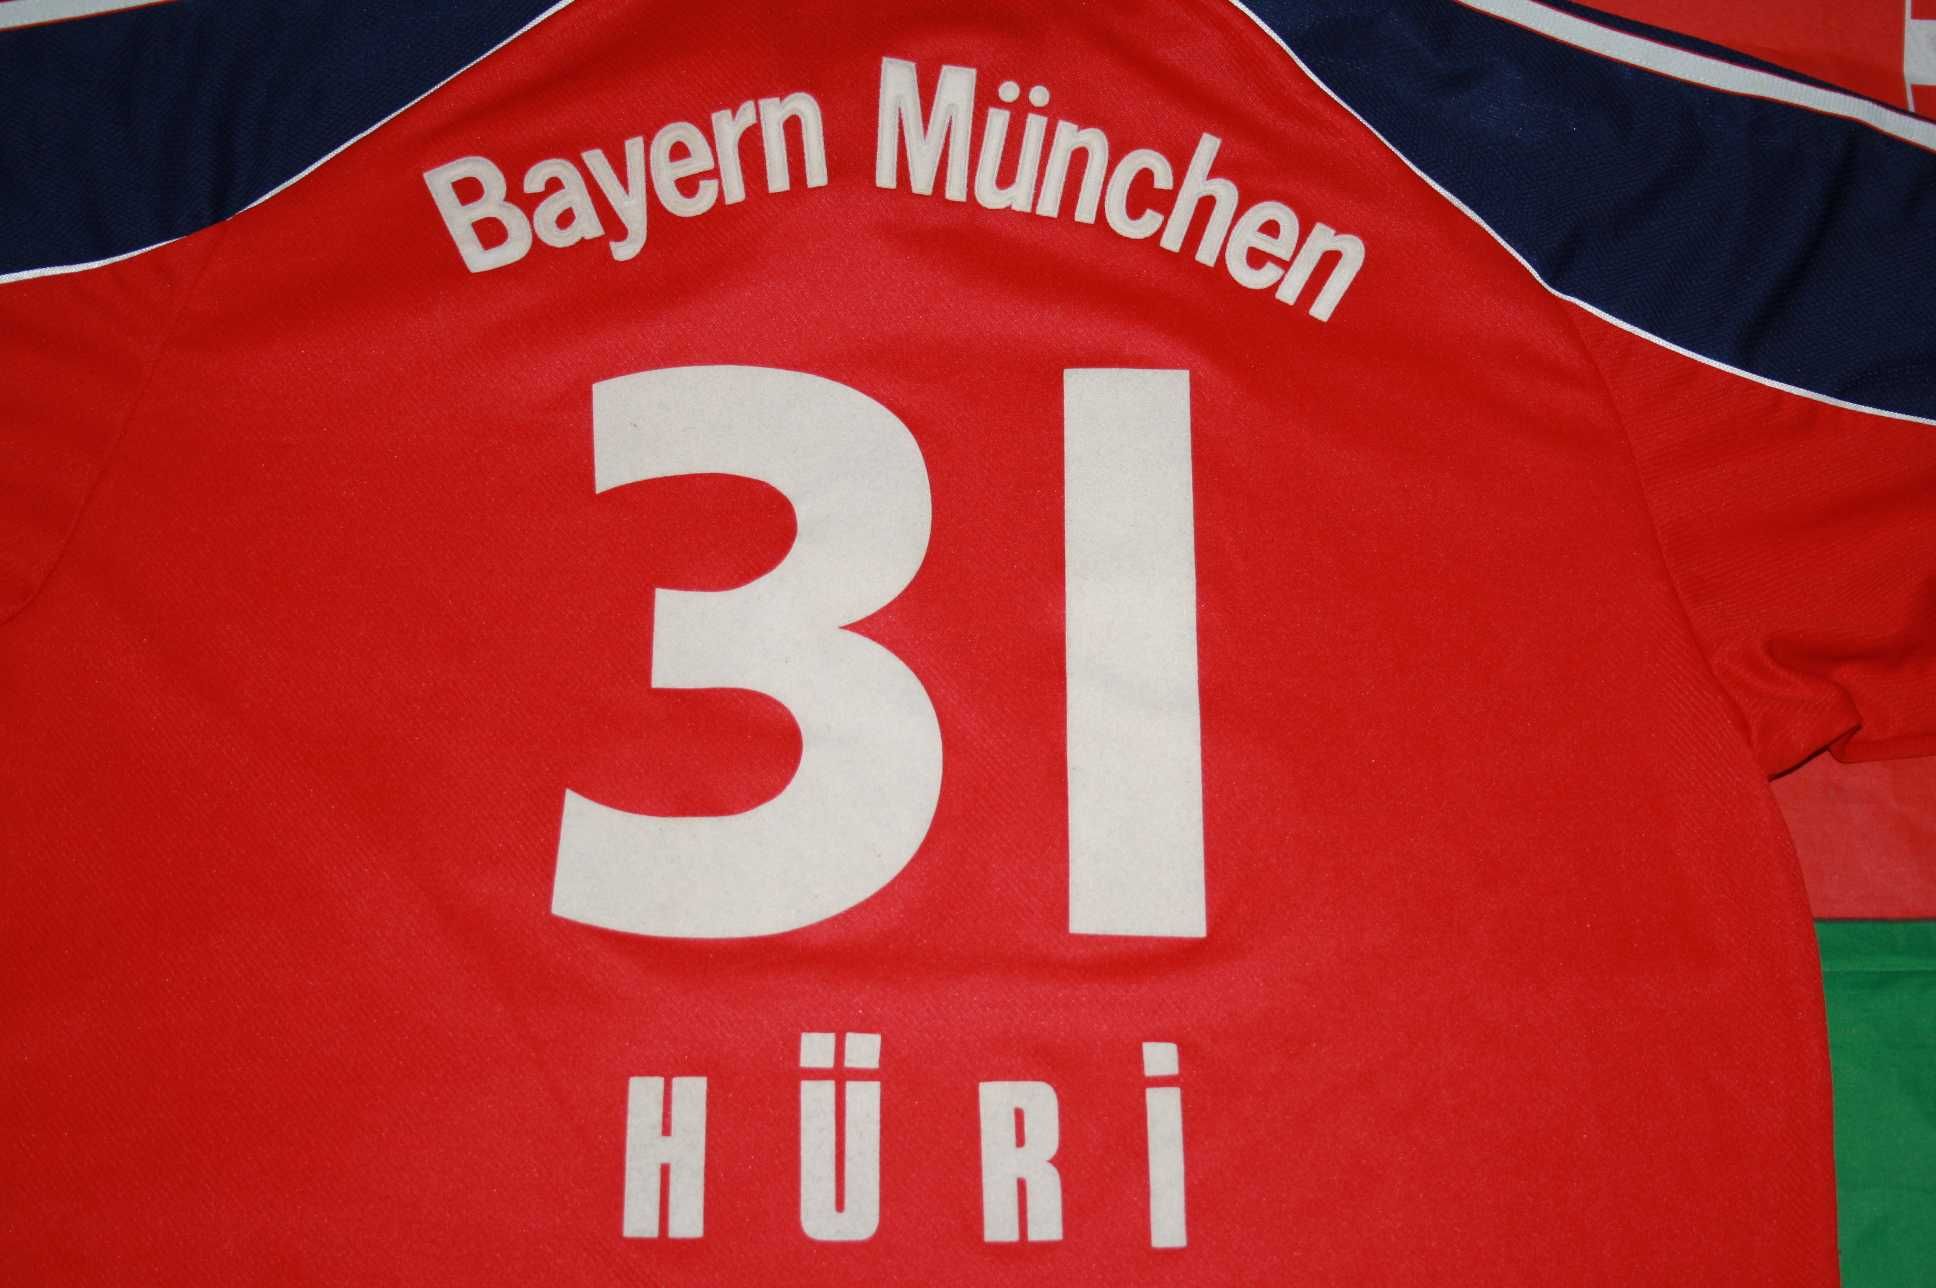 retro koszulka Bayern Munchen Huri 31